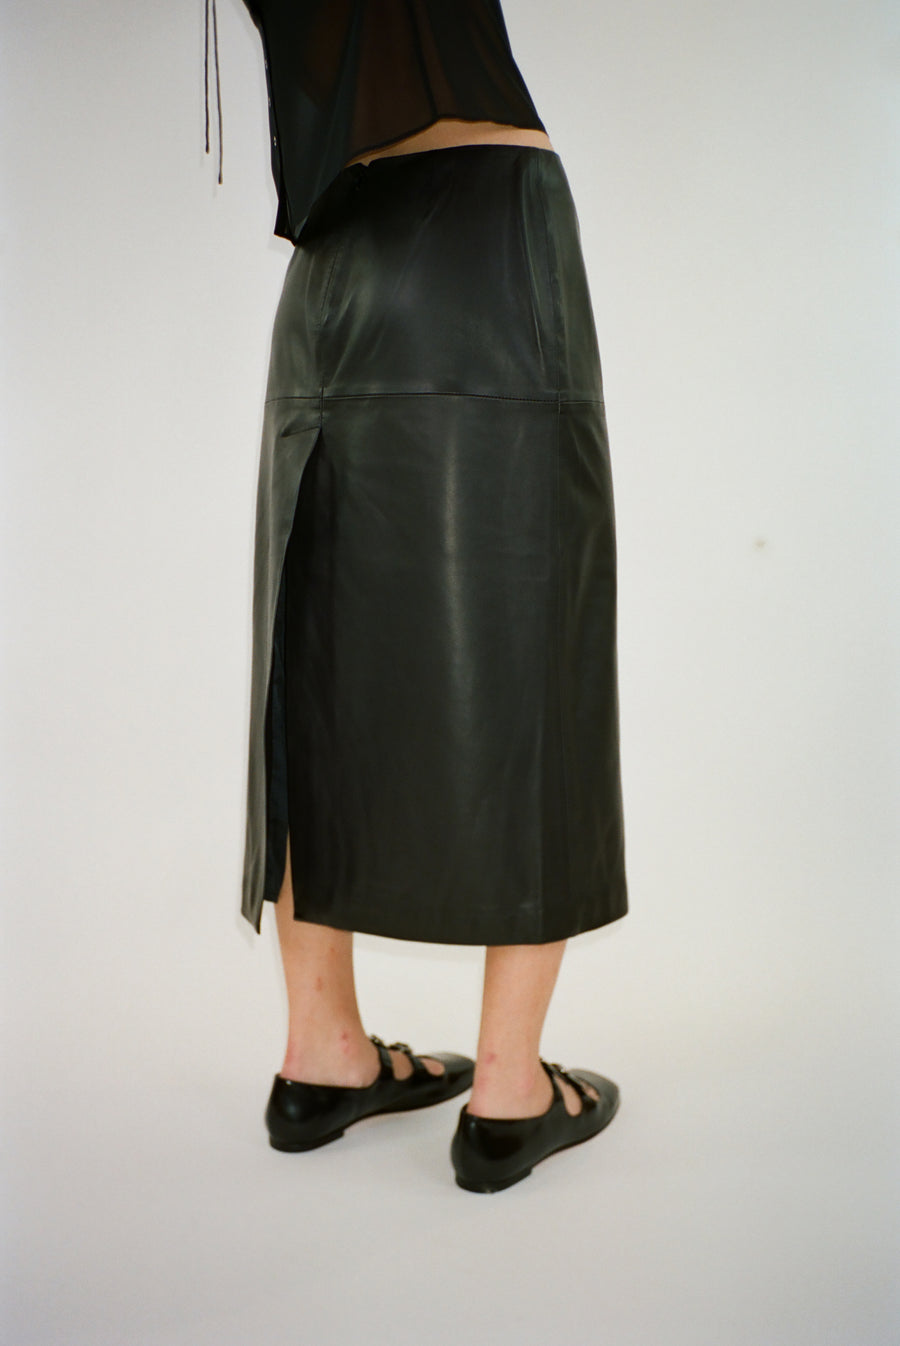 Midi length skirt in black nappa leather on model